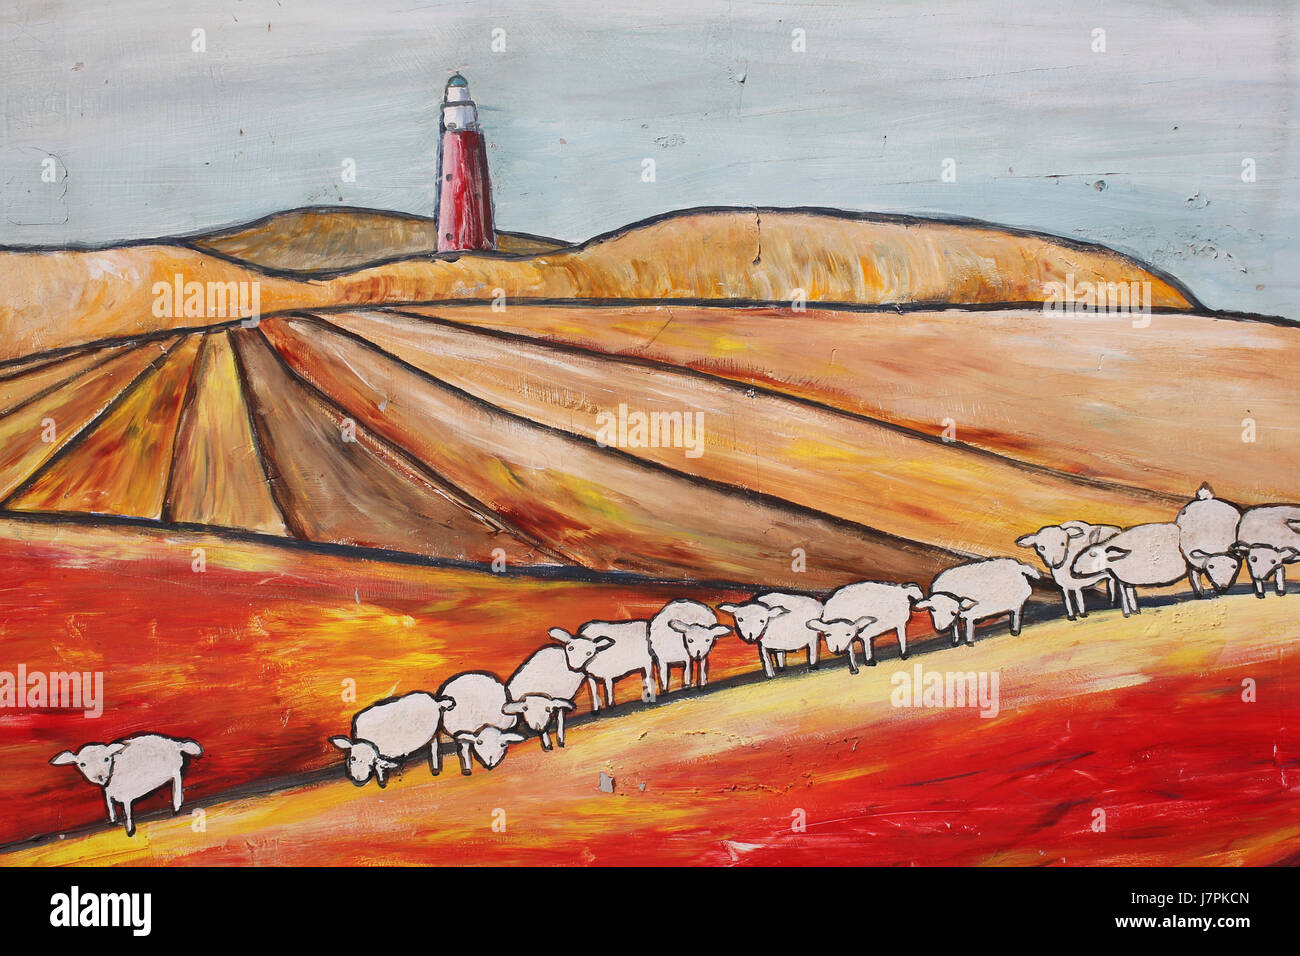 Texel Sheep And Lighthouse Graffiti Stock Photo